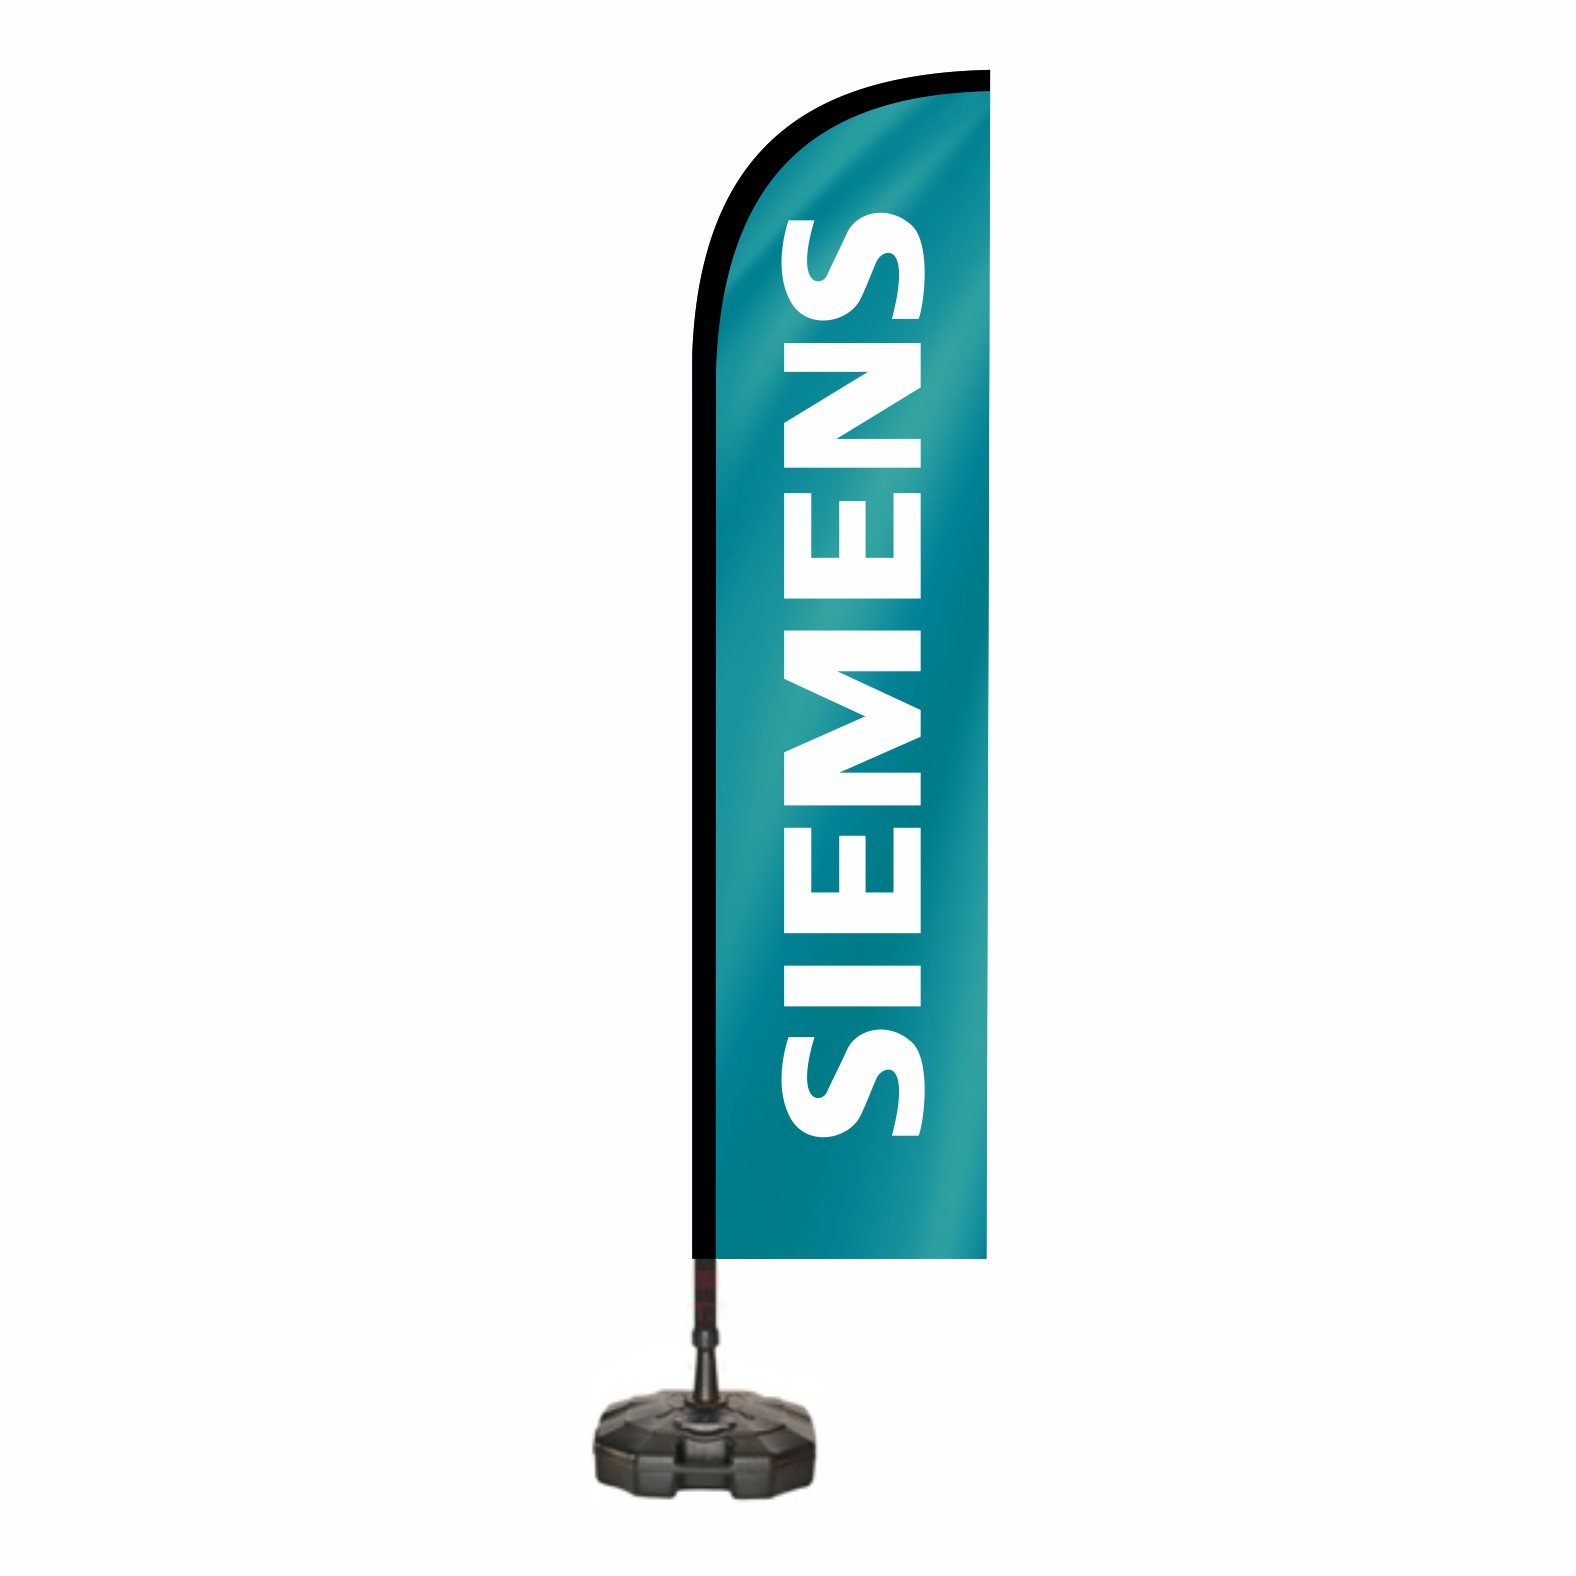 Siemens Yelken Bayraklar Sat Fiyat